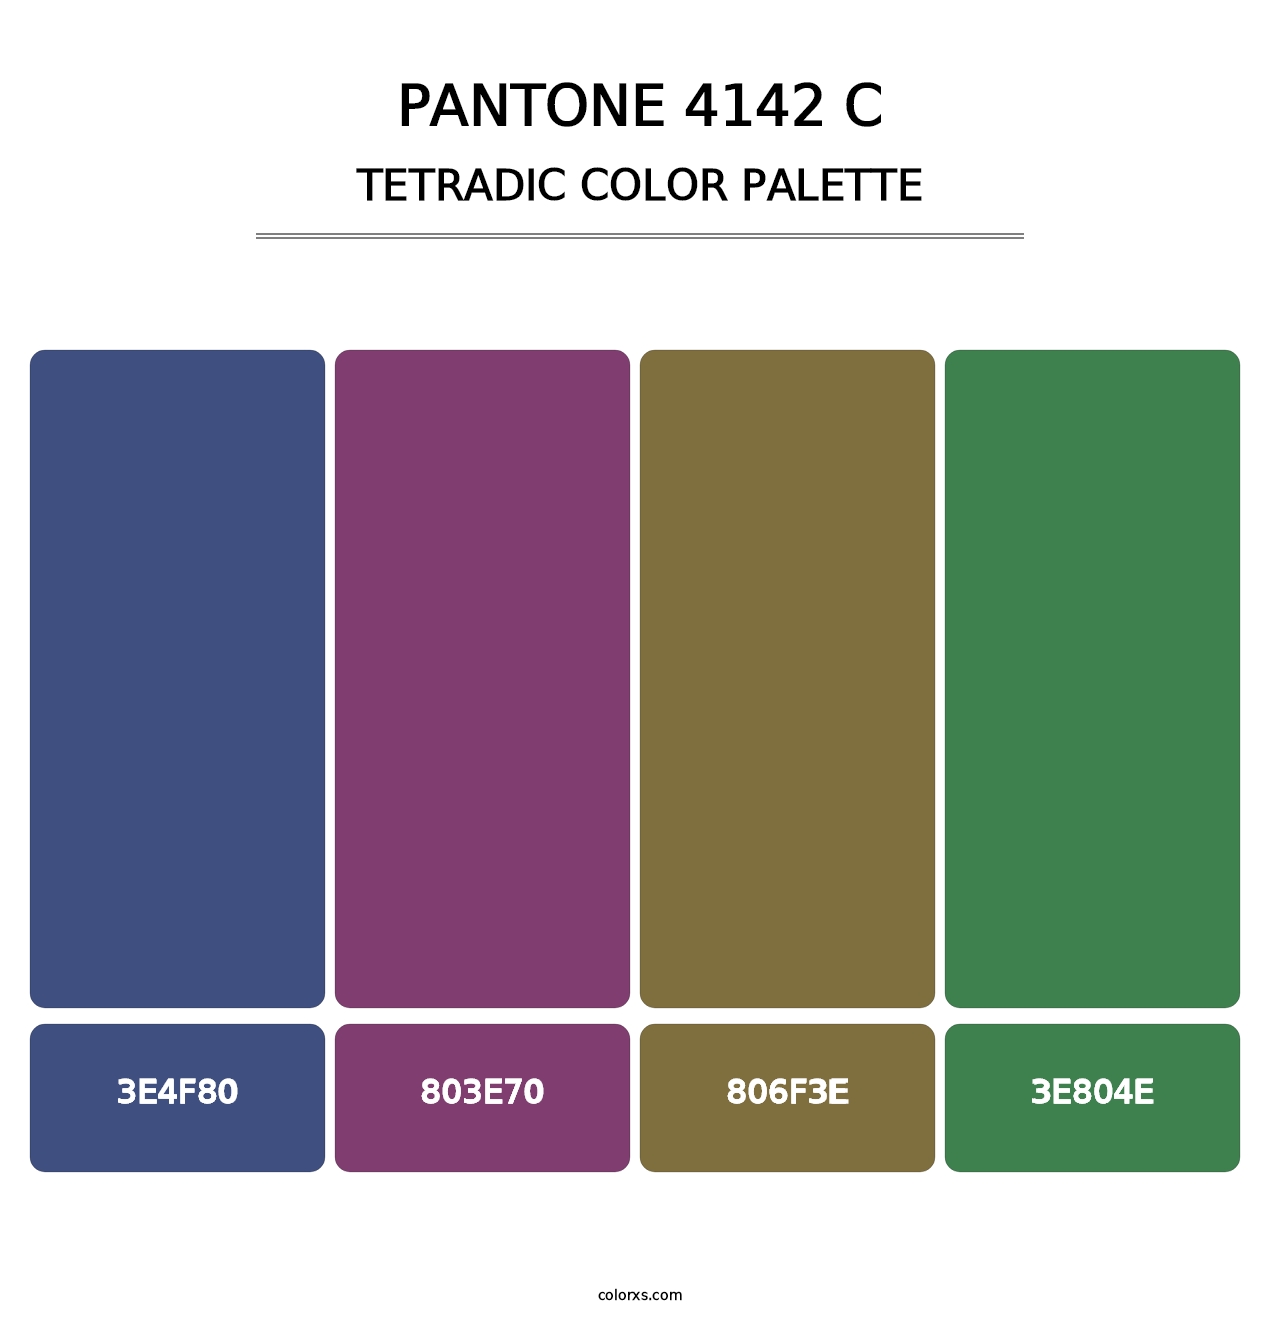 PANTONE 4142 C - Tetradic Color Palette